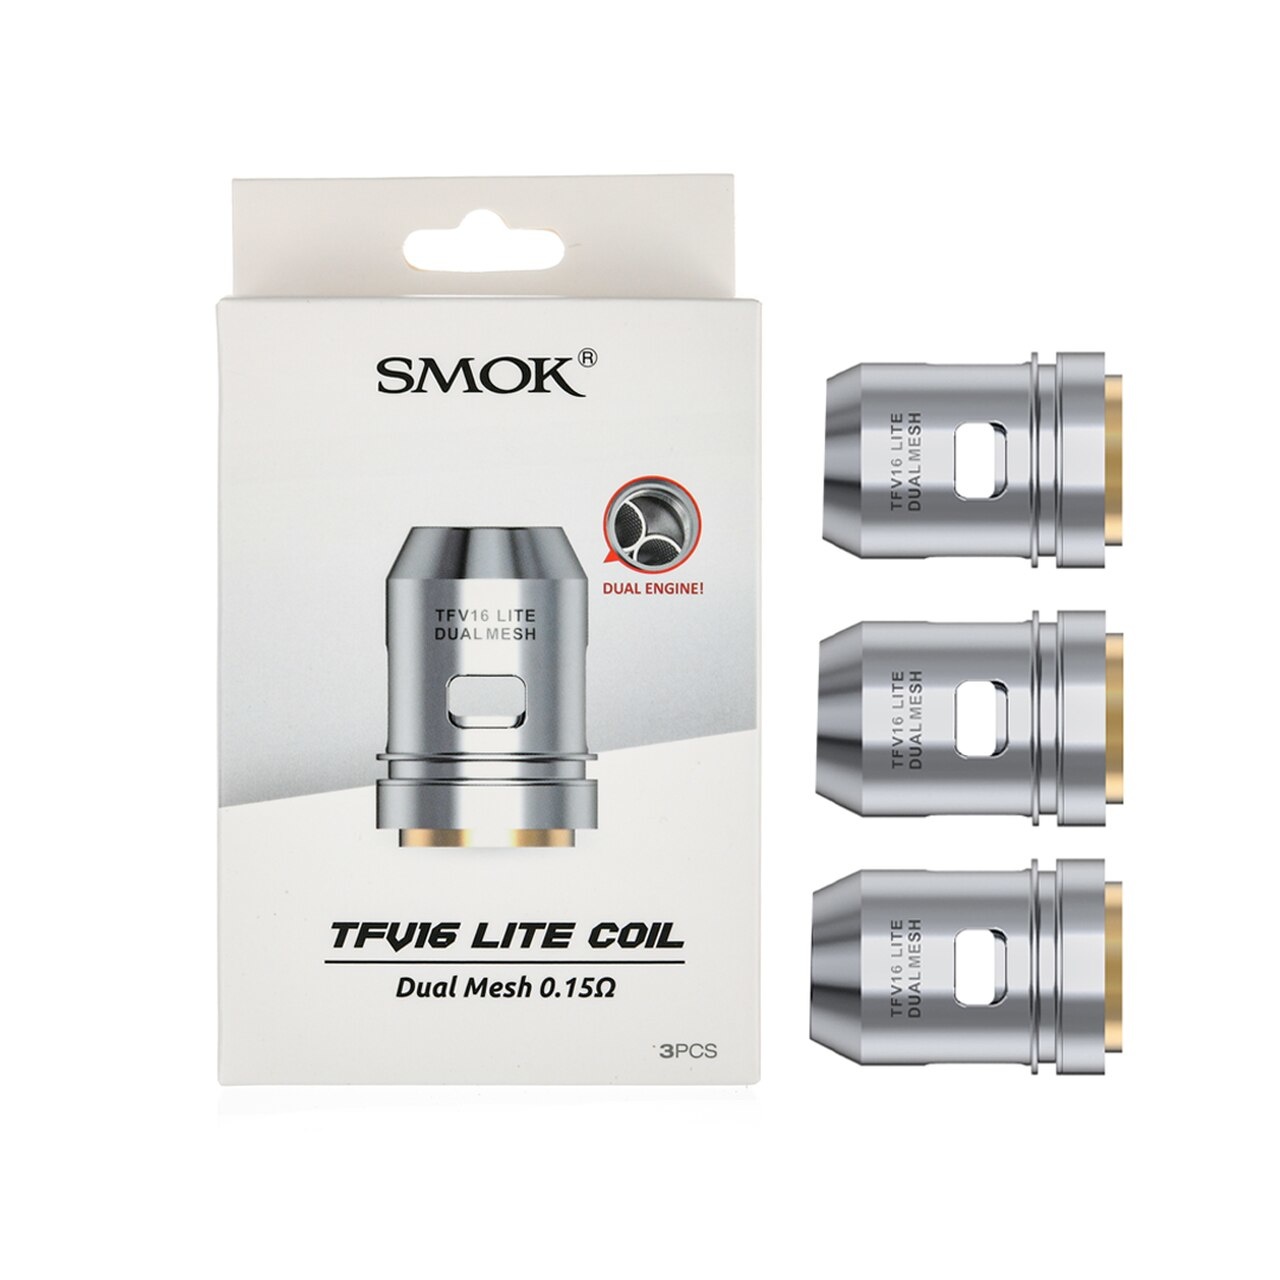 Smok Smok TFV16 Lite Dual Mesh 0.15 Coil Box